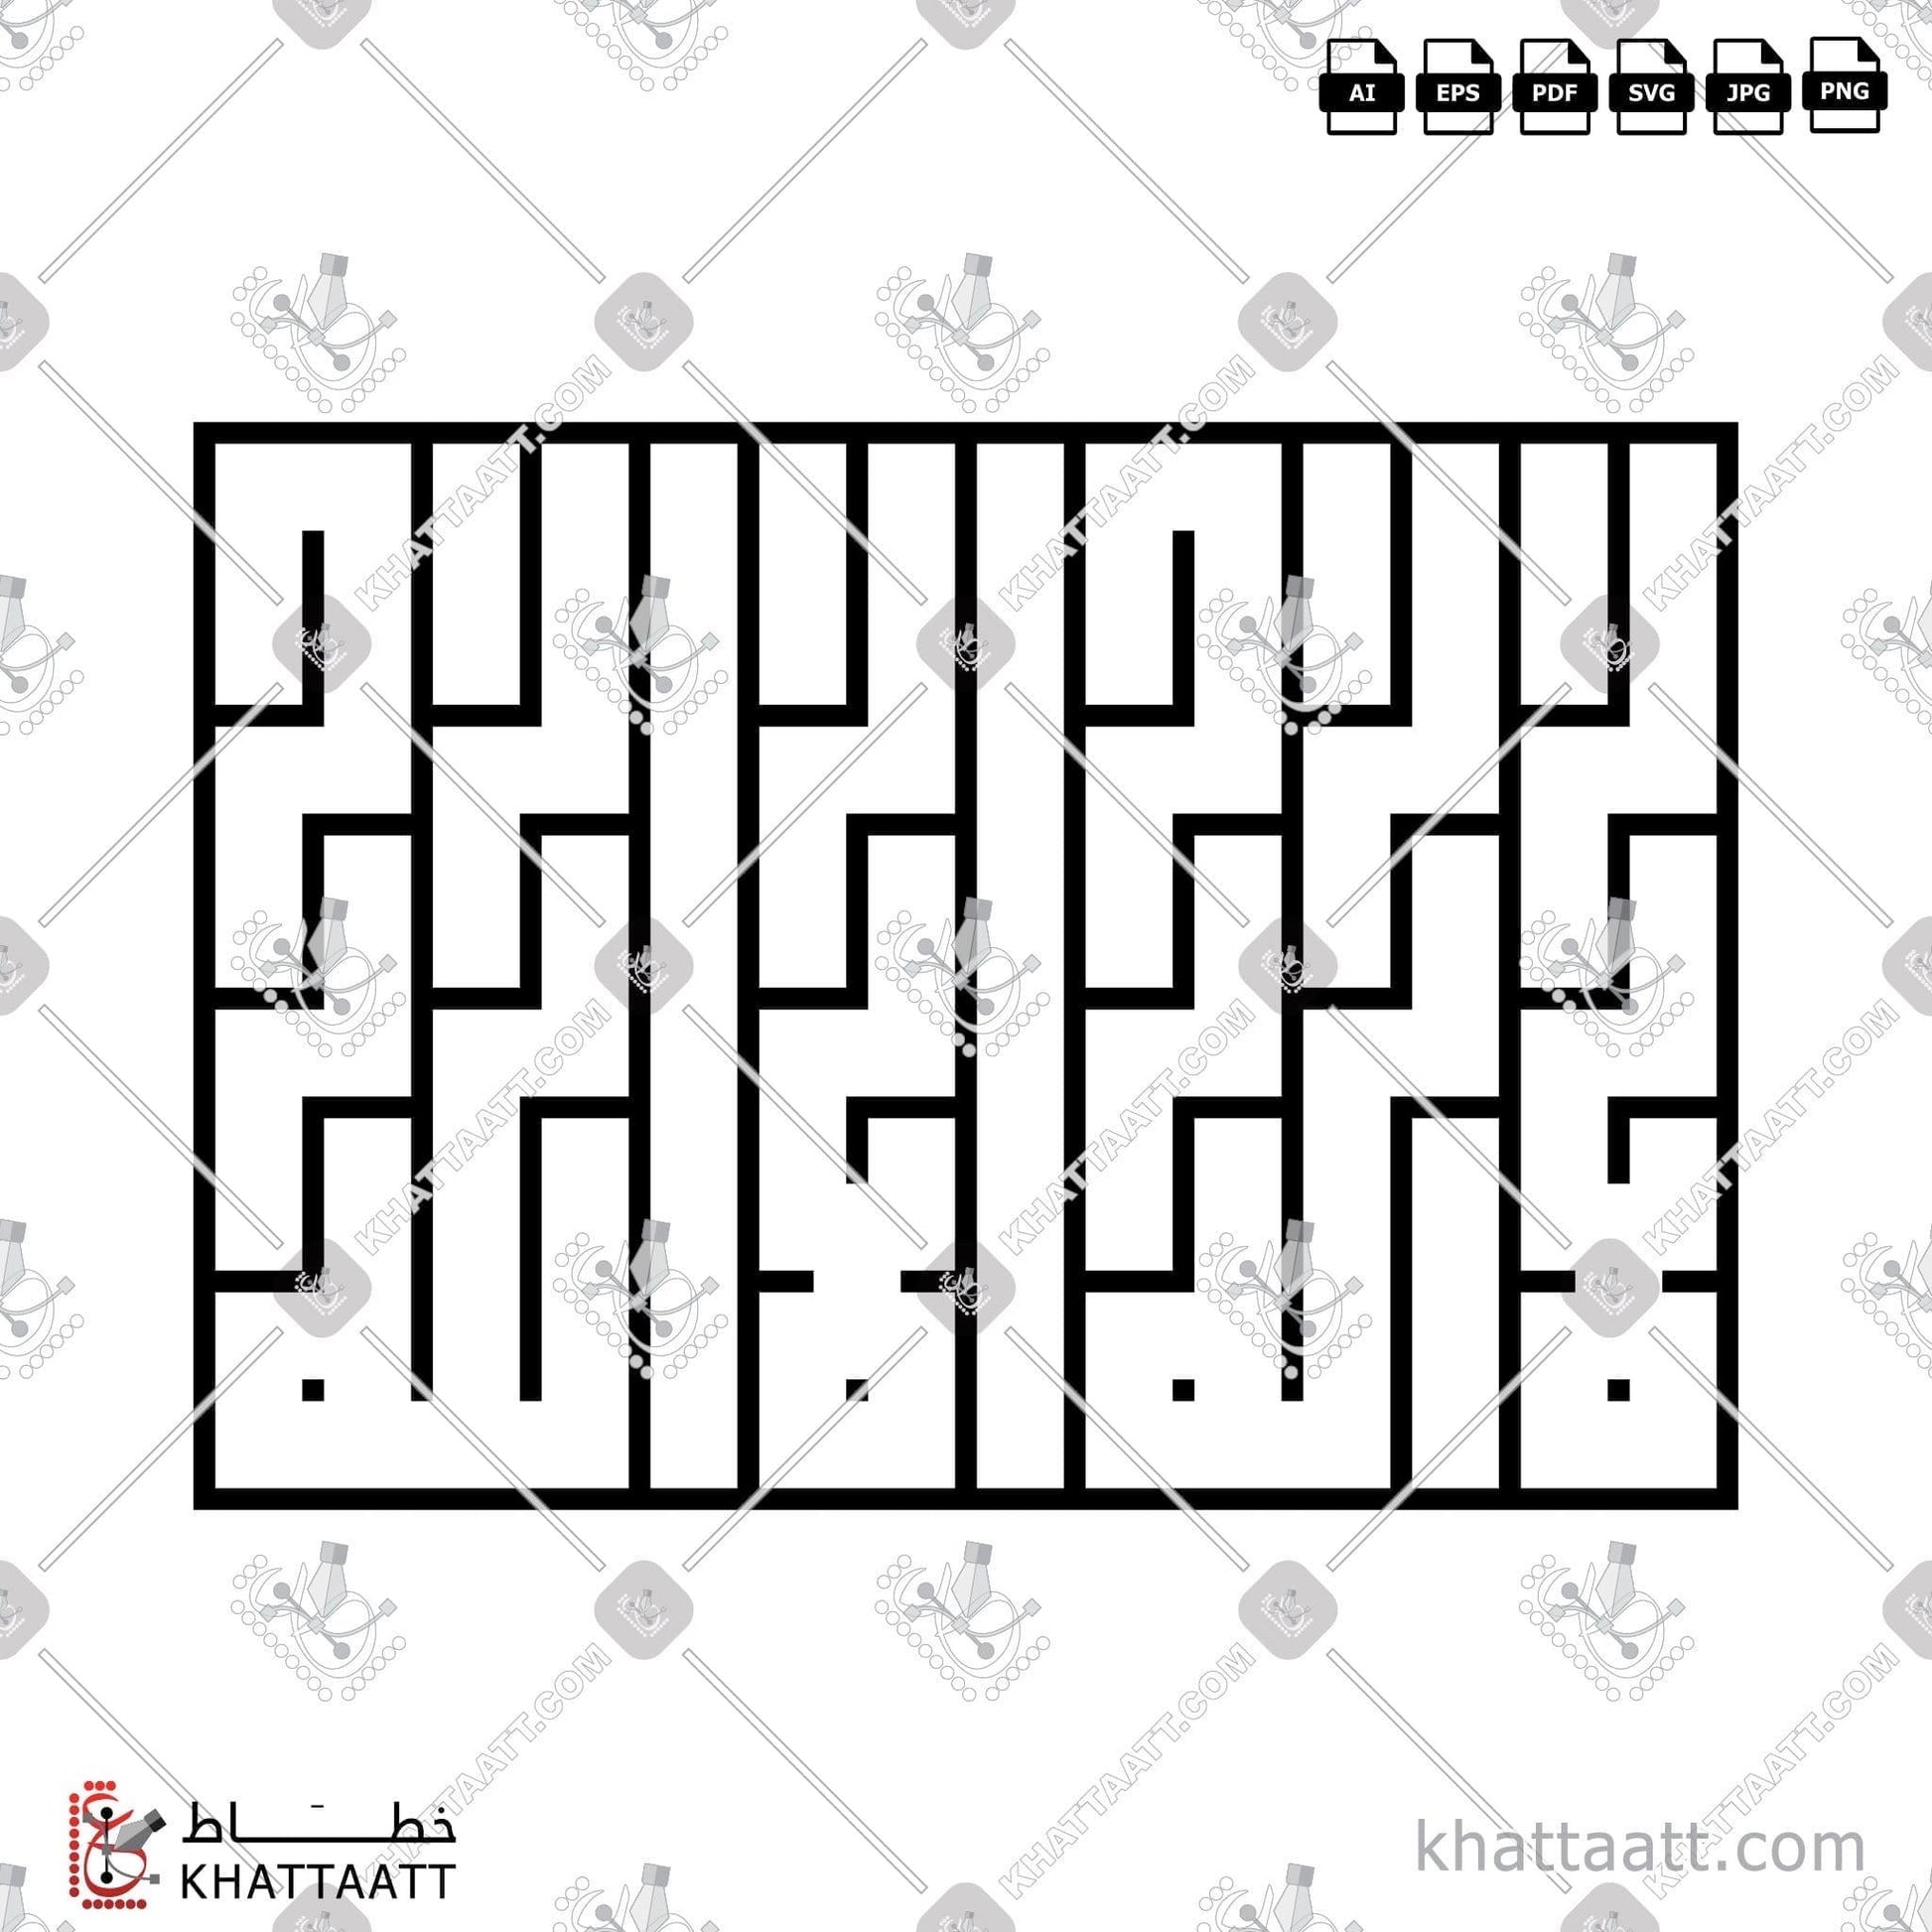 Download Arabic Calligraphy of لا إله إلا الله in Kufi - الخط الكوفي in vector and .png